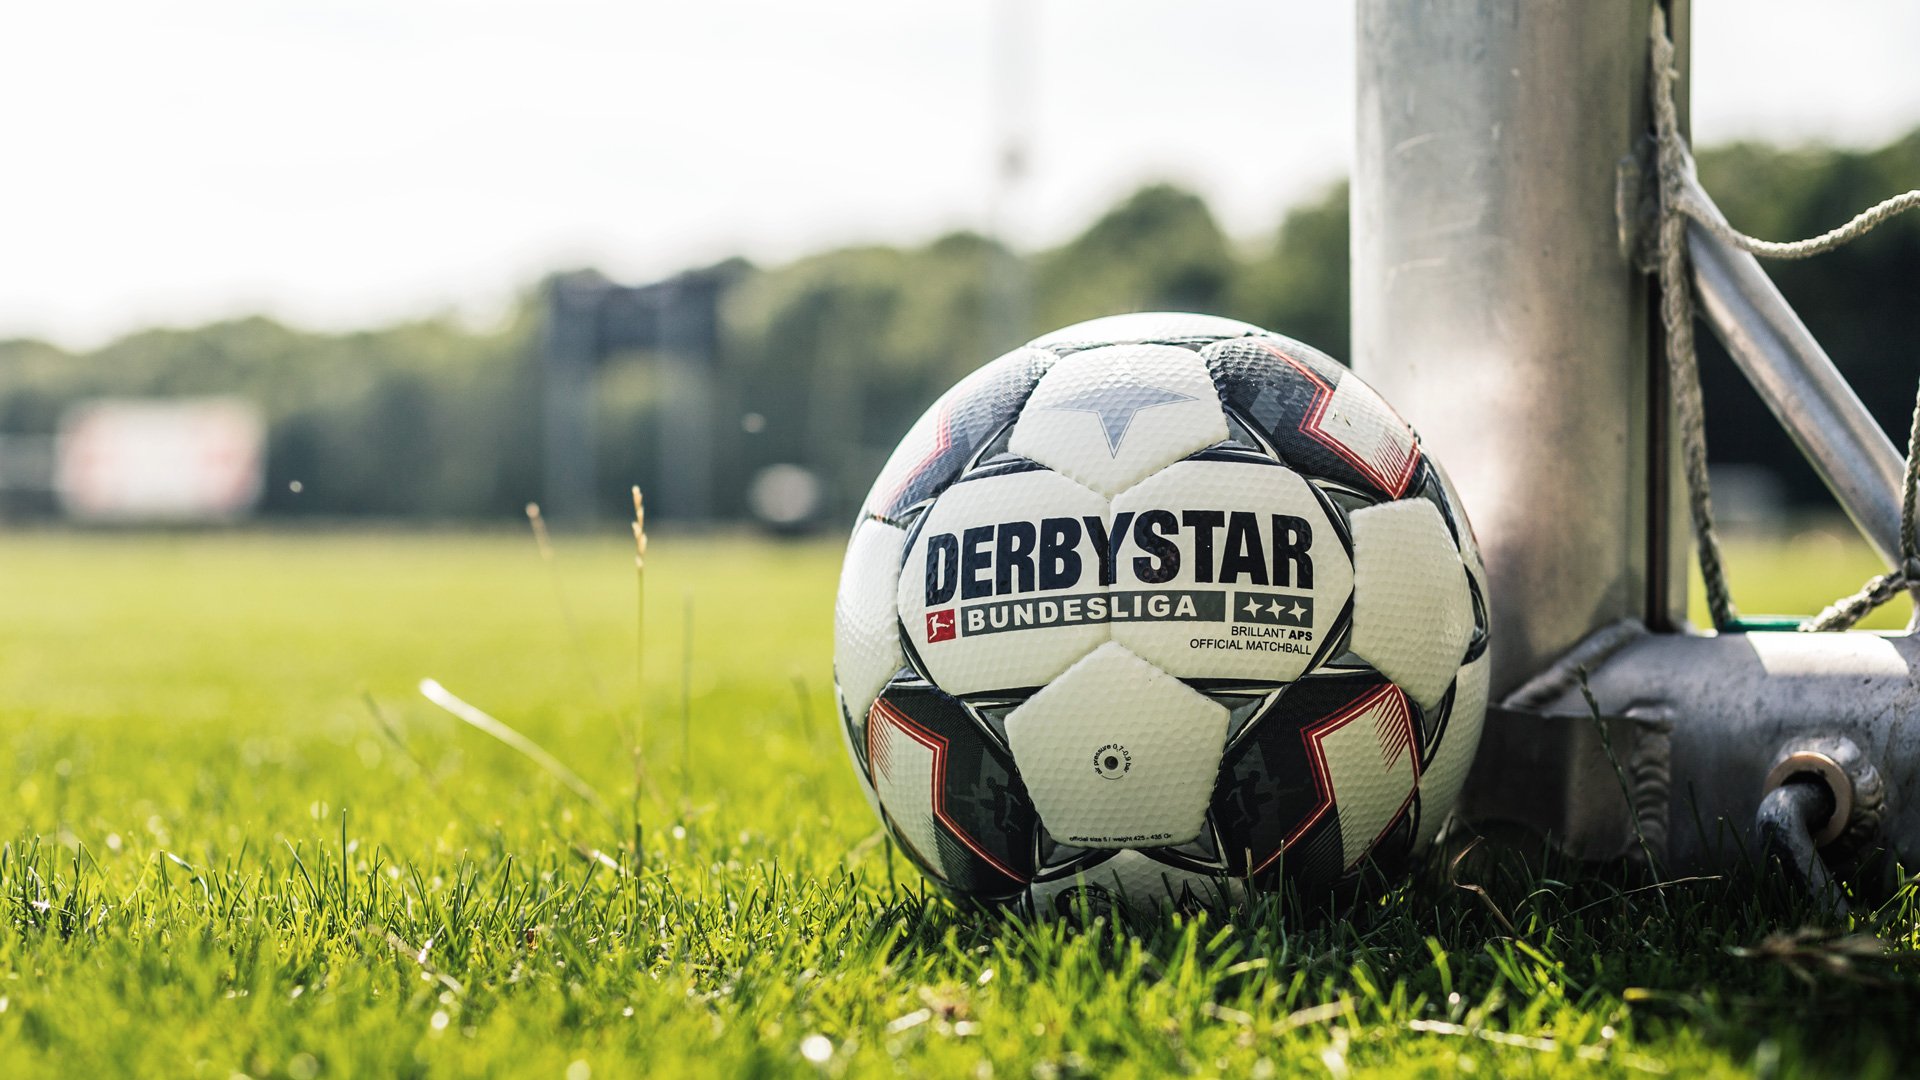 Derbystar Football Soccer Training Street Ball Size 5 Machine Stitched Orange Ye 